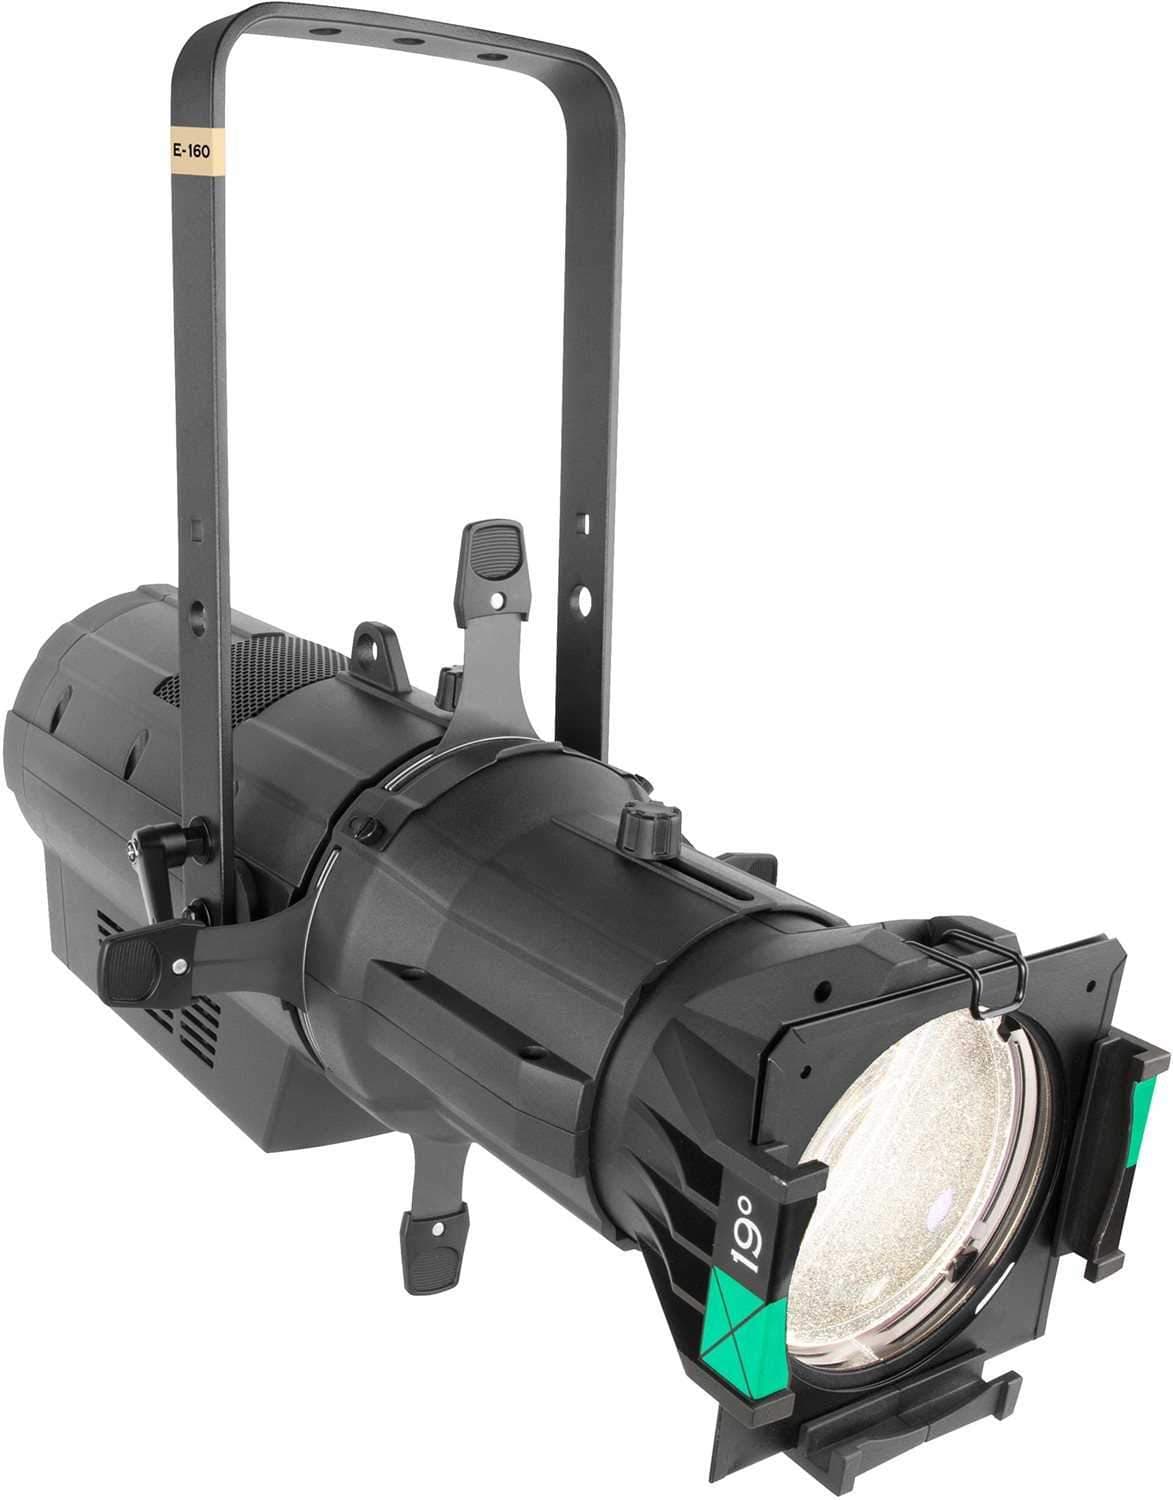 Chauvet Ovation E-160WW 36-Degree LED Ellipsoidal Light - PSSL ProSound and Stage Lighting